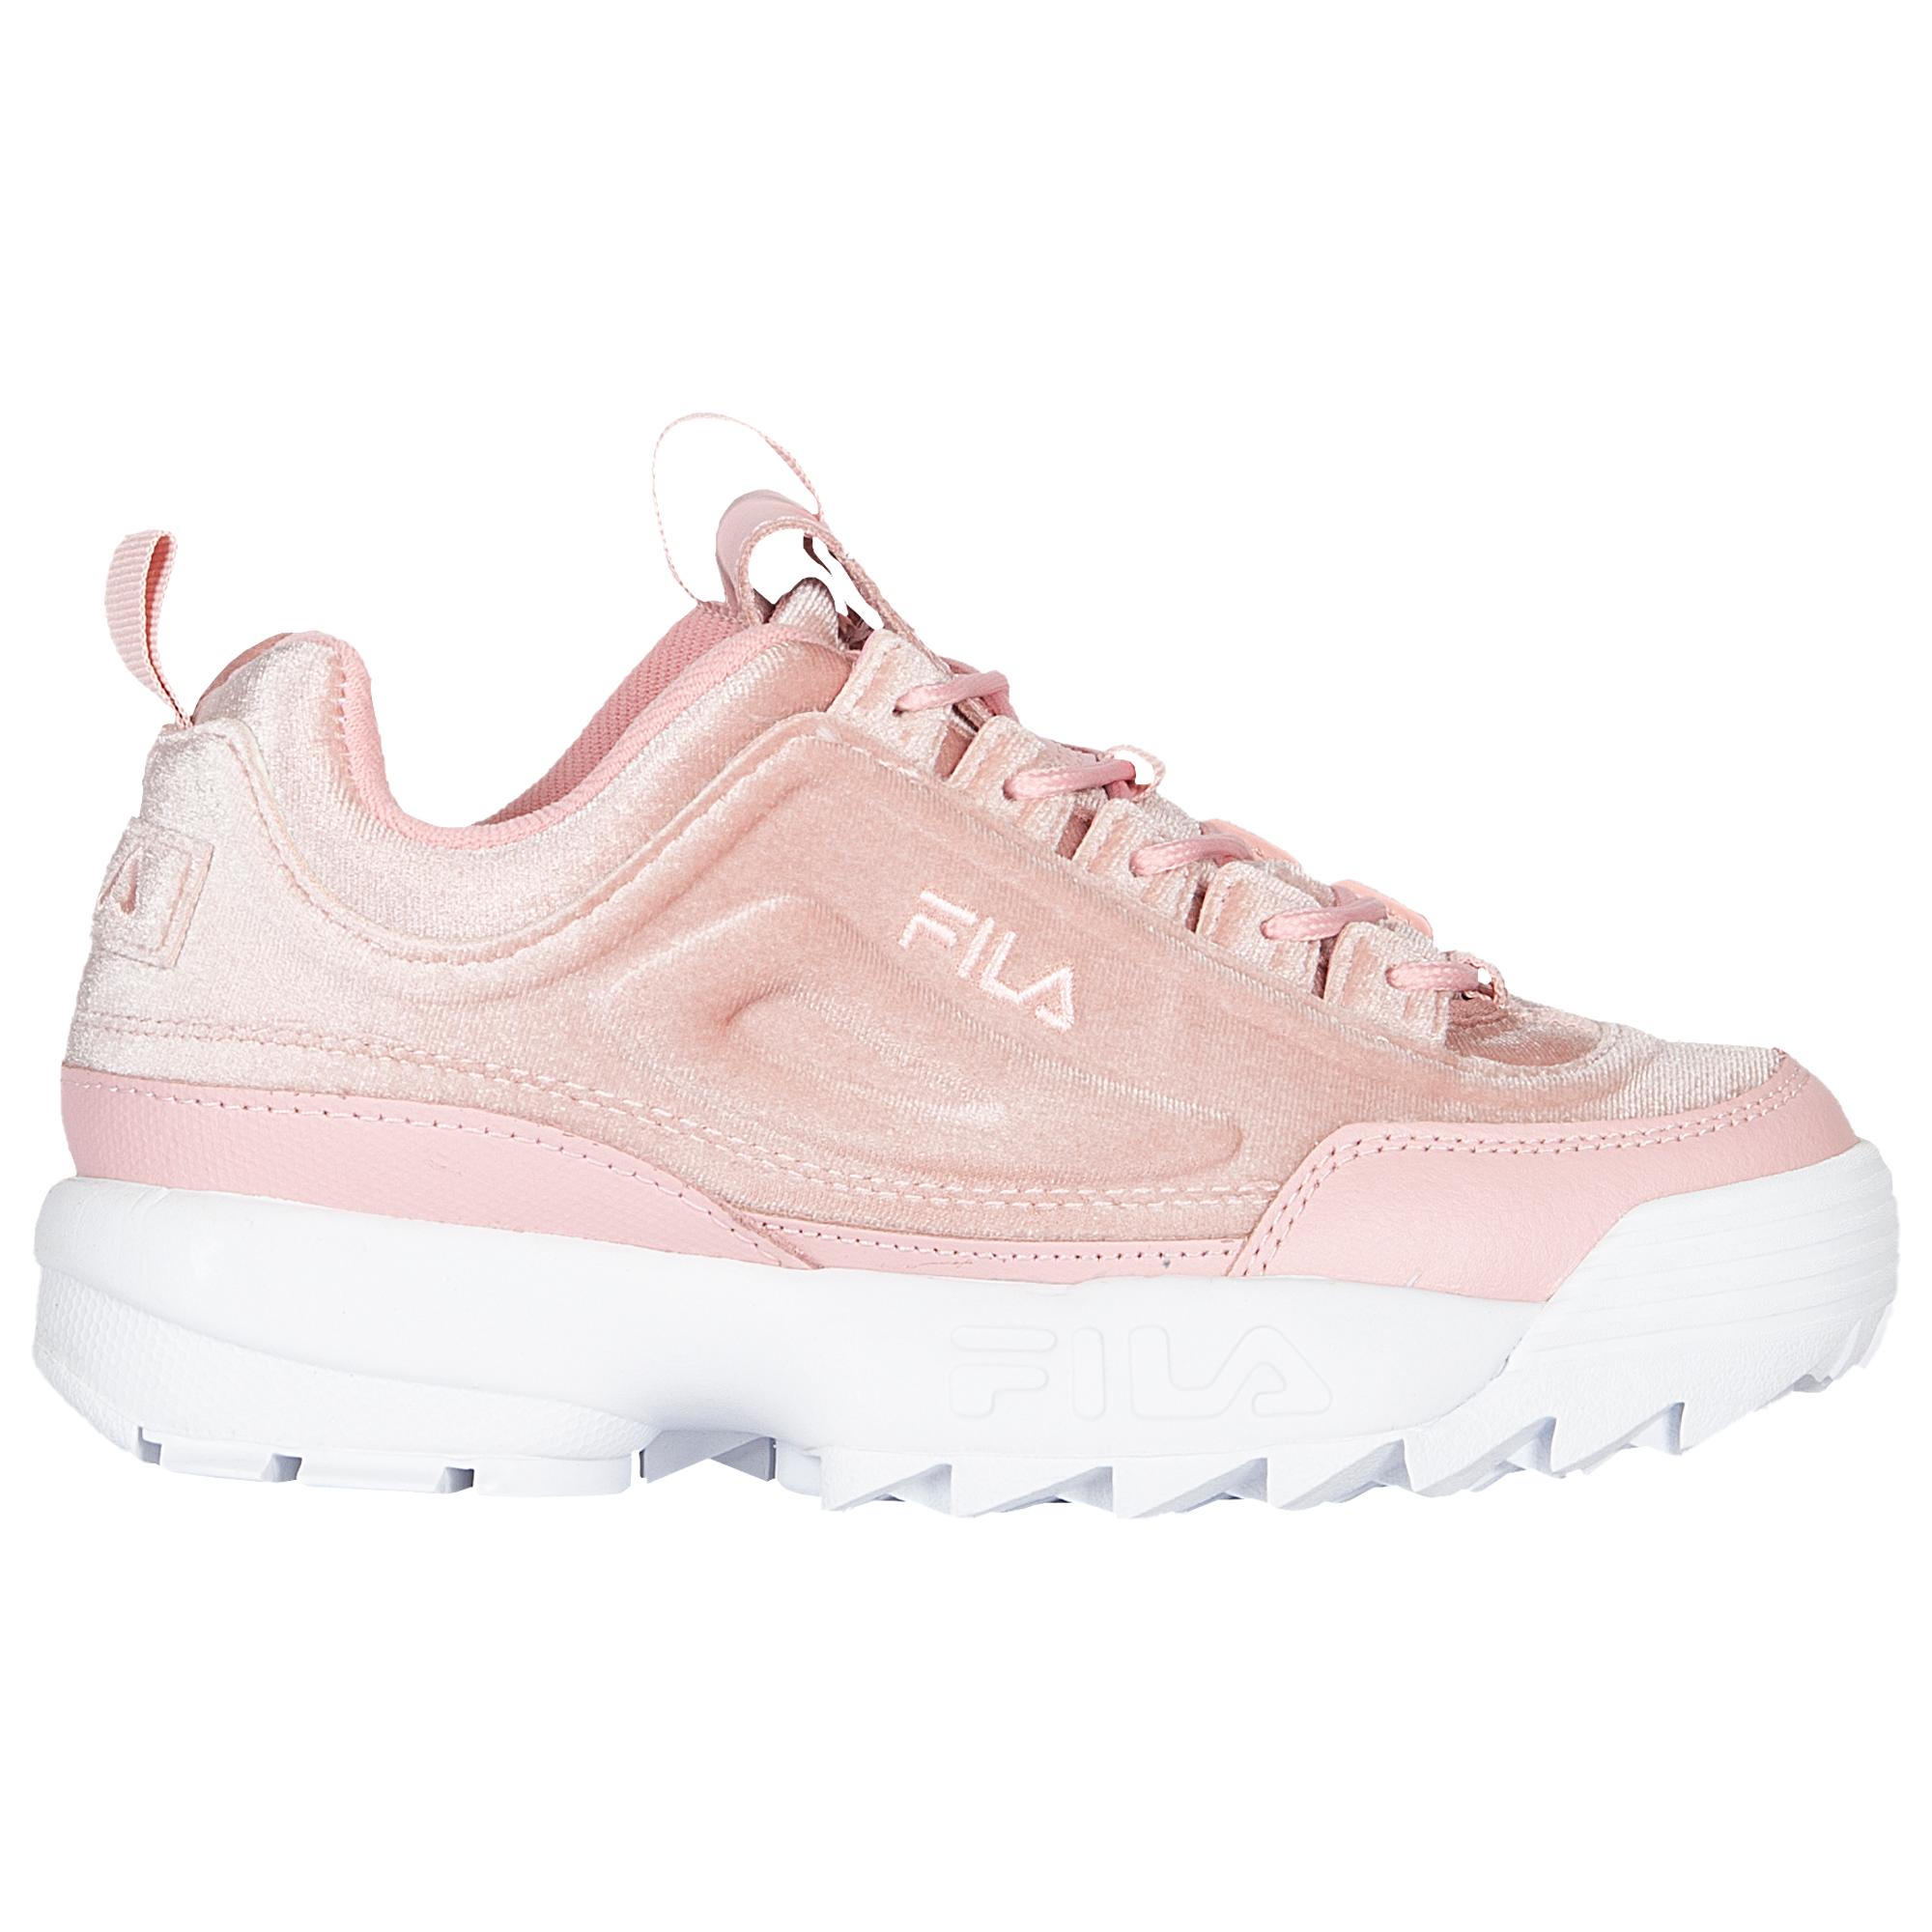  Fila  Disruptor Velvet Training Shoes  in Pink Lyst